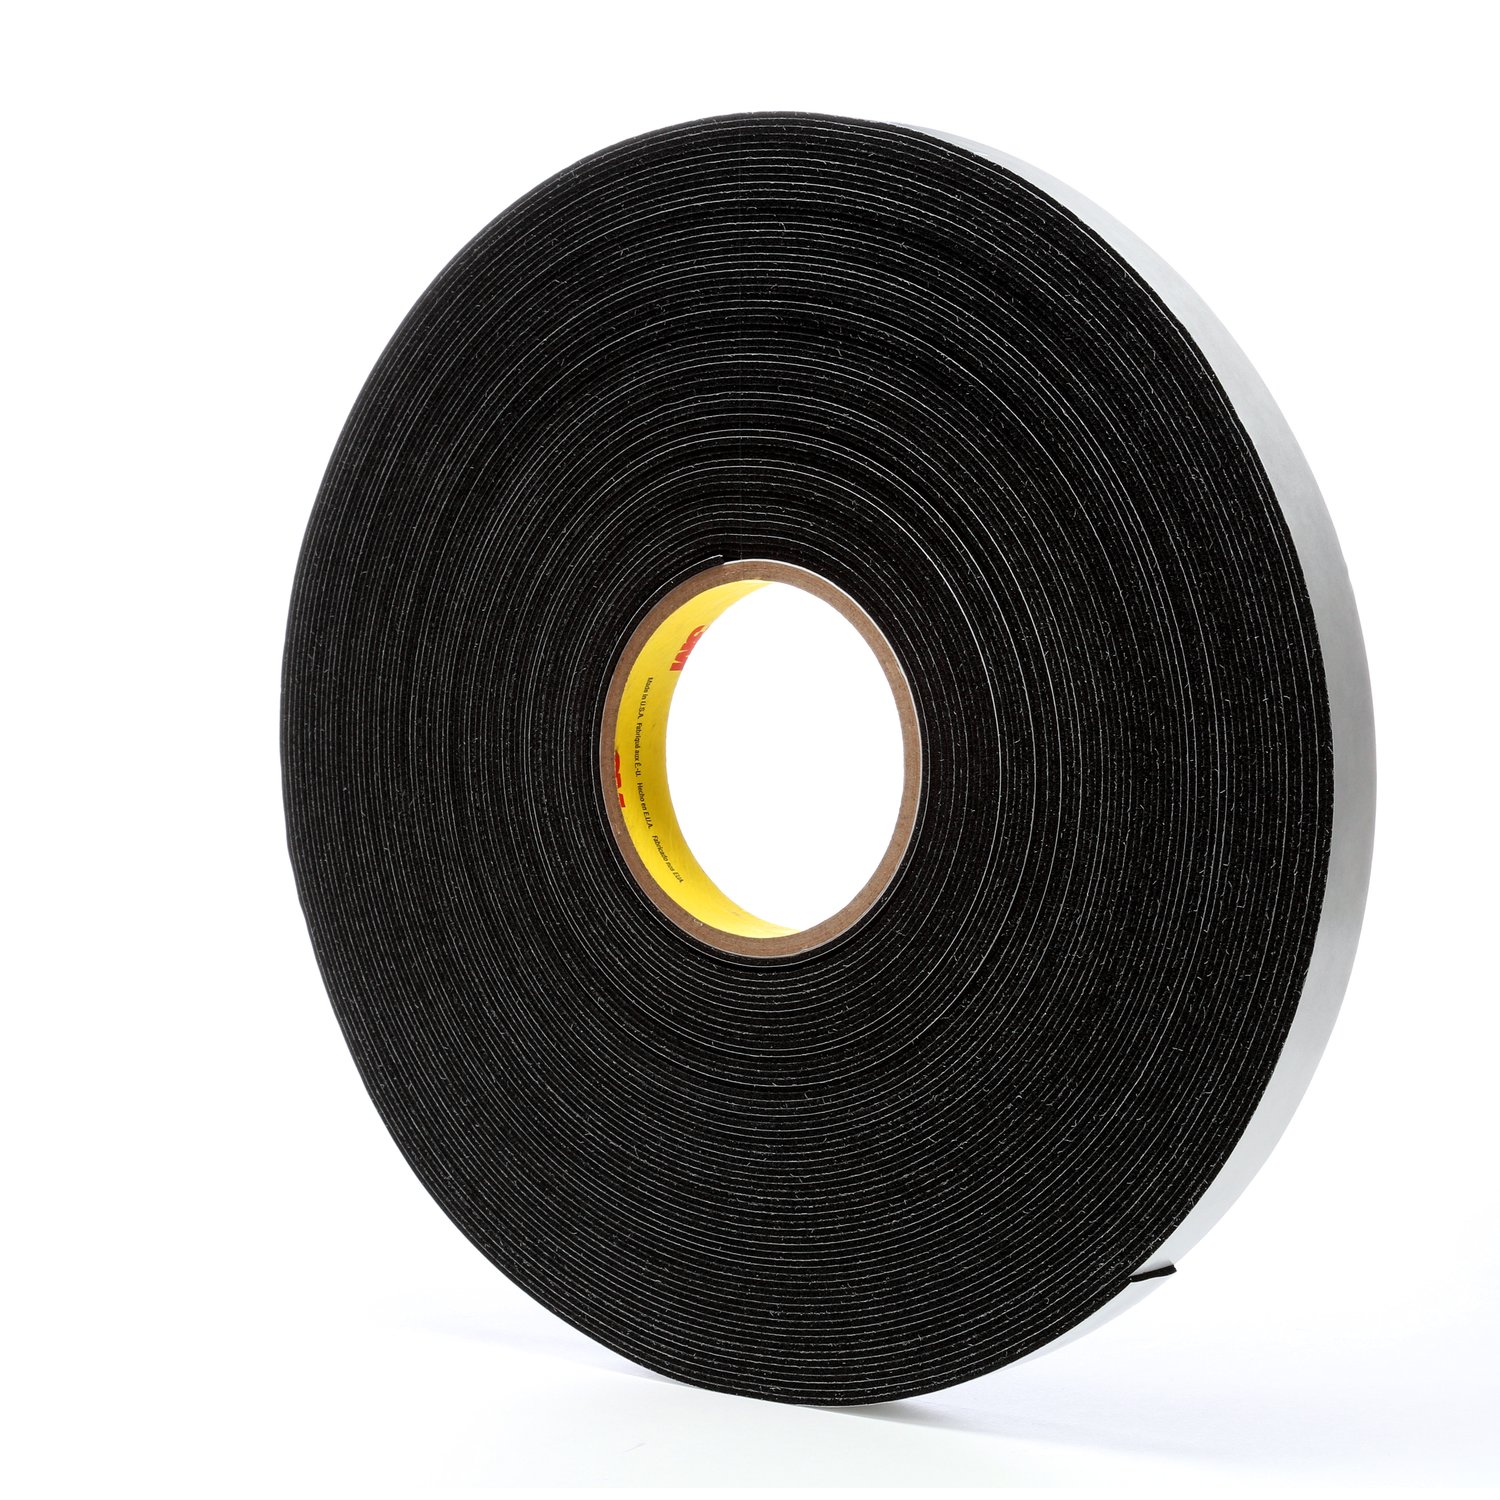 7010379940 - 3M Venture Tape Vinyl Foam Tape 1714, Gray, 3/8 in x 50 ft, 250 mil,
32 rolls per case